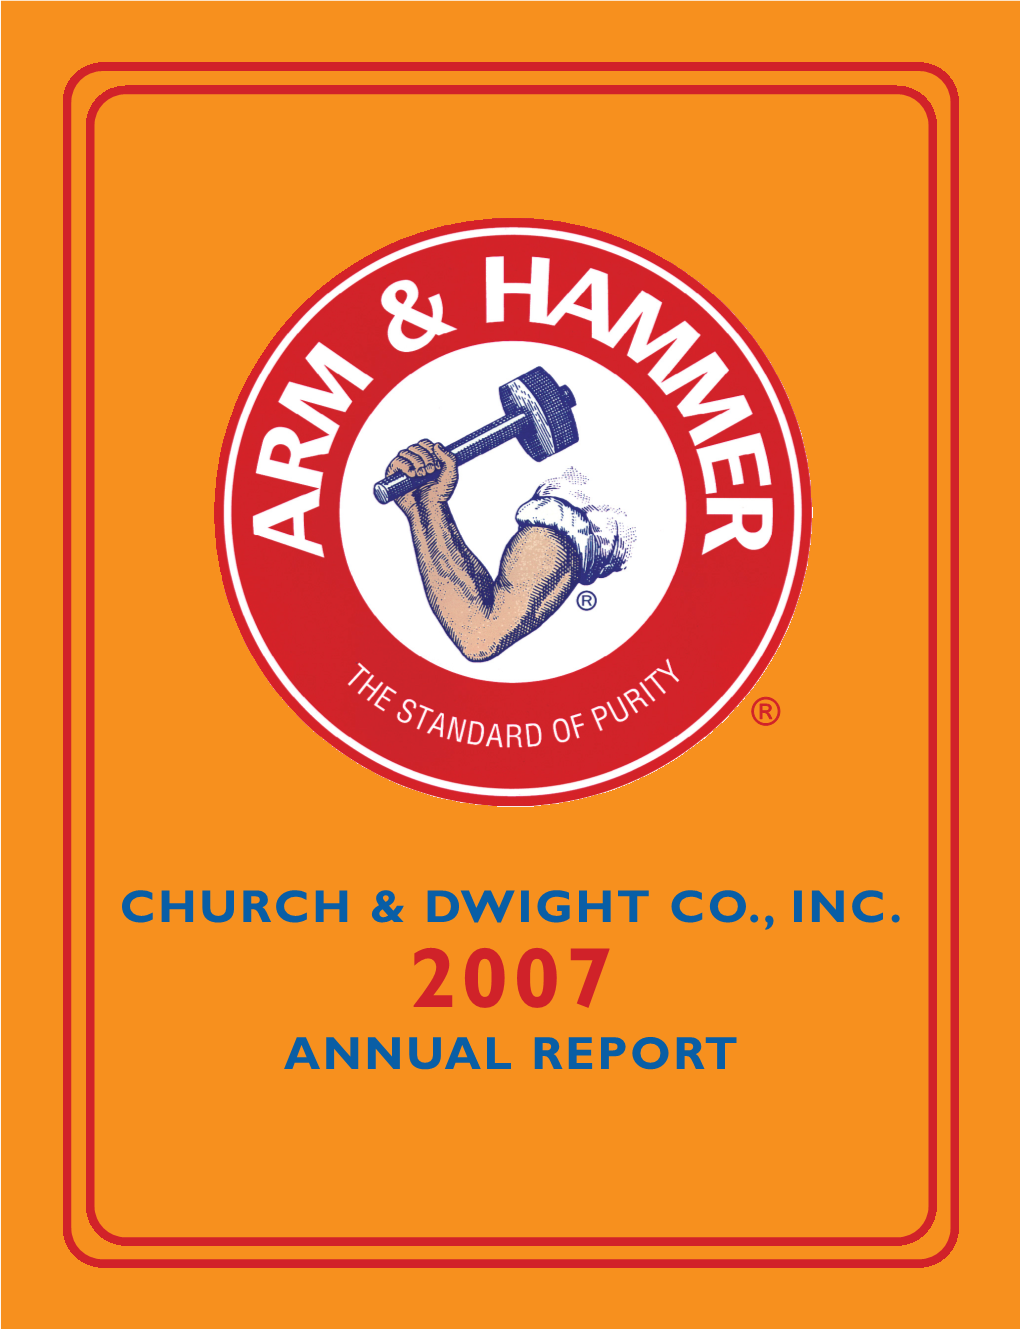 Church & Dwight Co., Inc. Annual Report